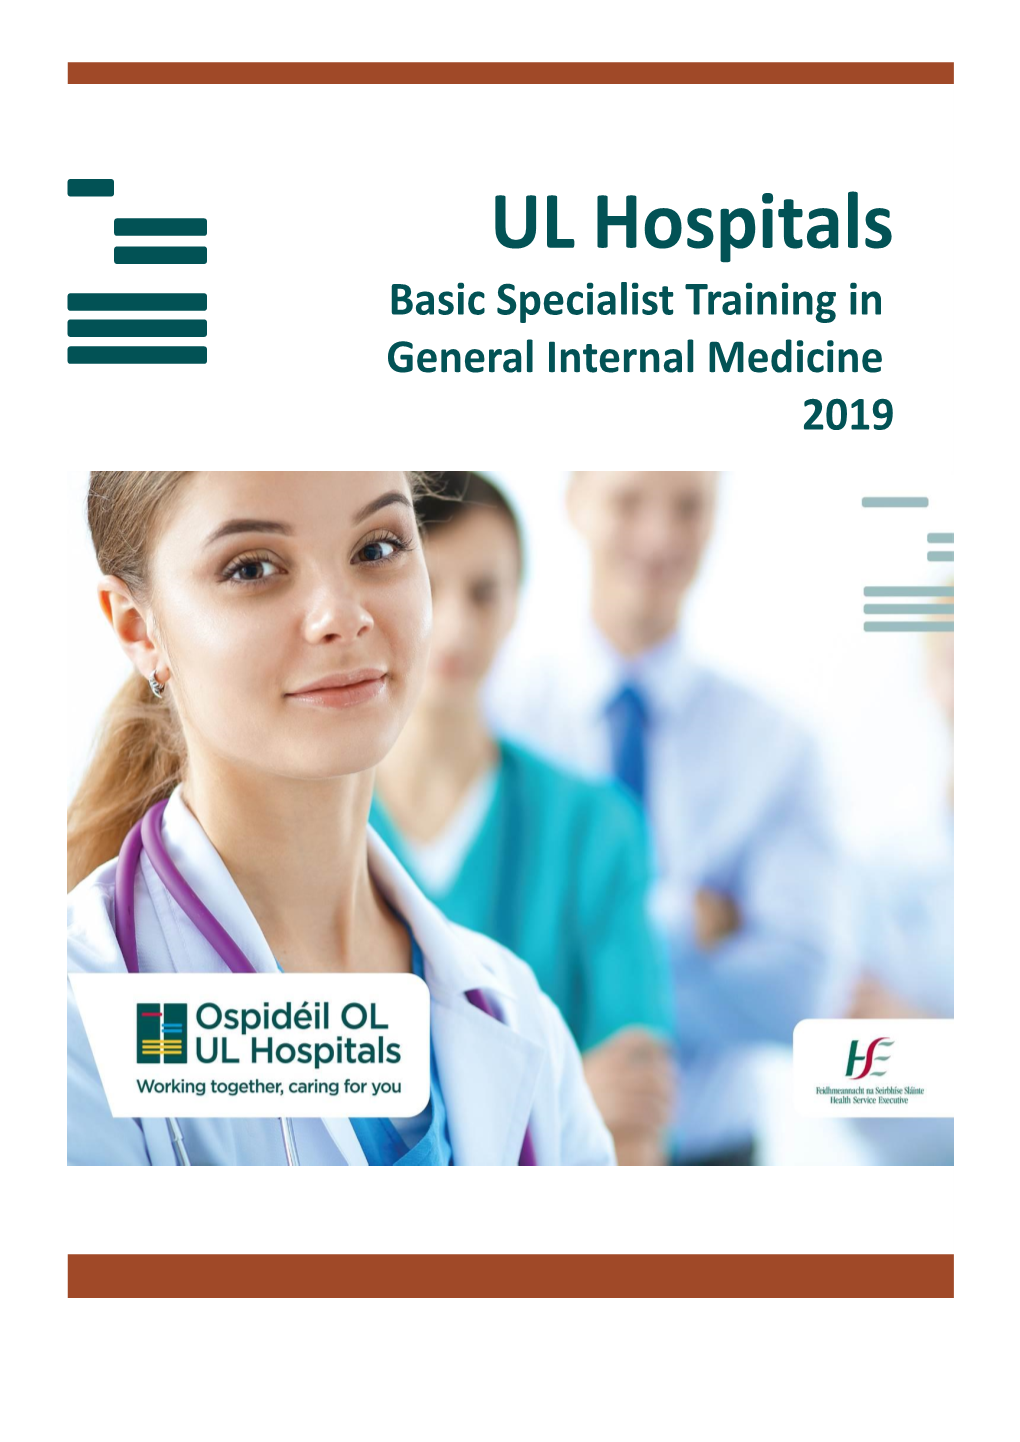 UL Hospitals Basic Specialist Training in General Internal Medicine 2019